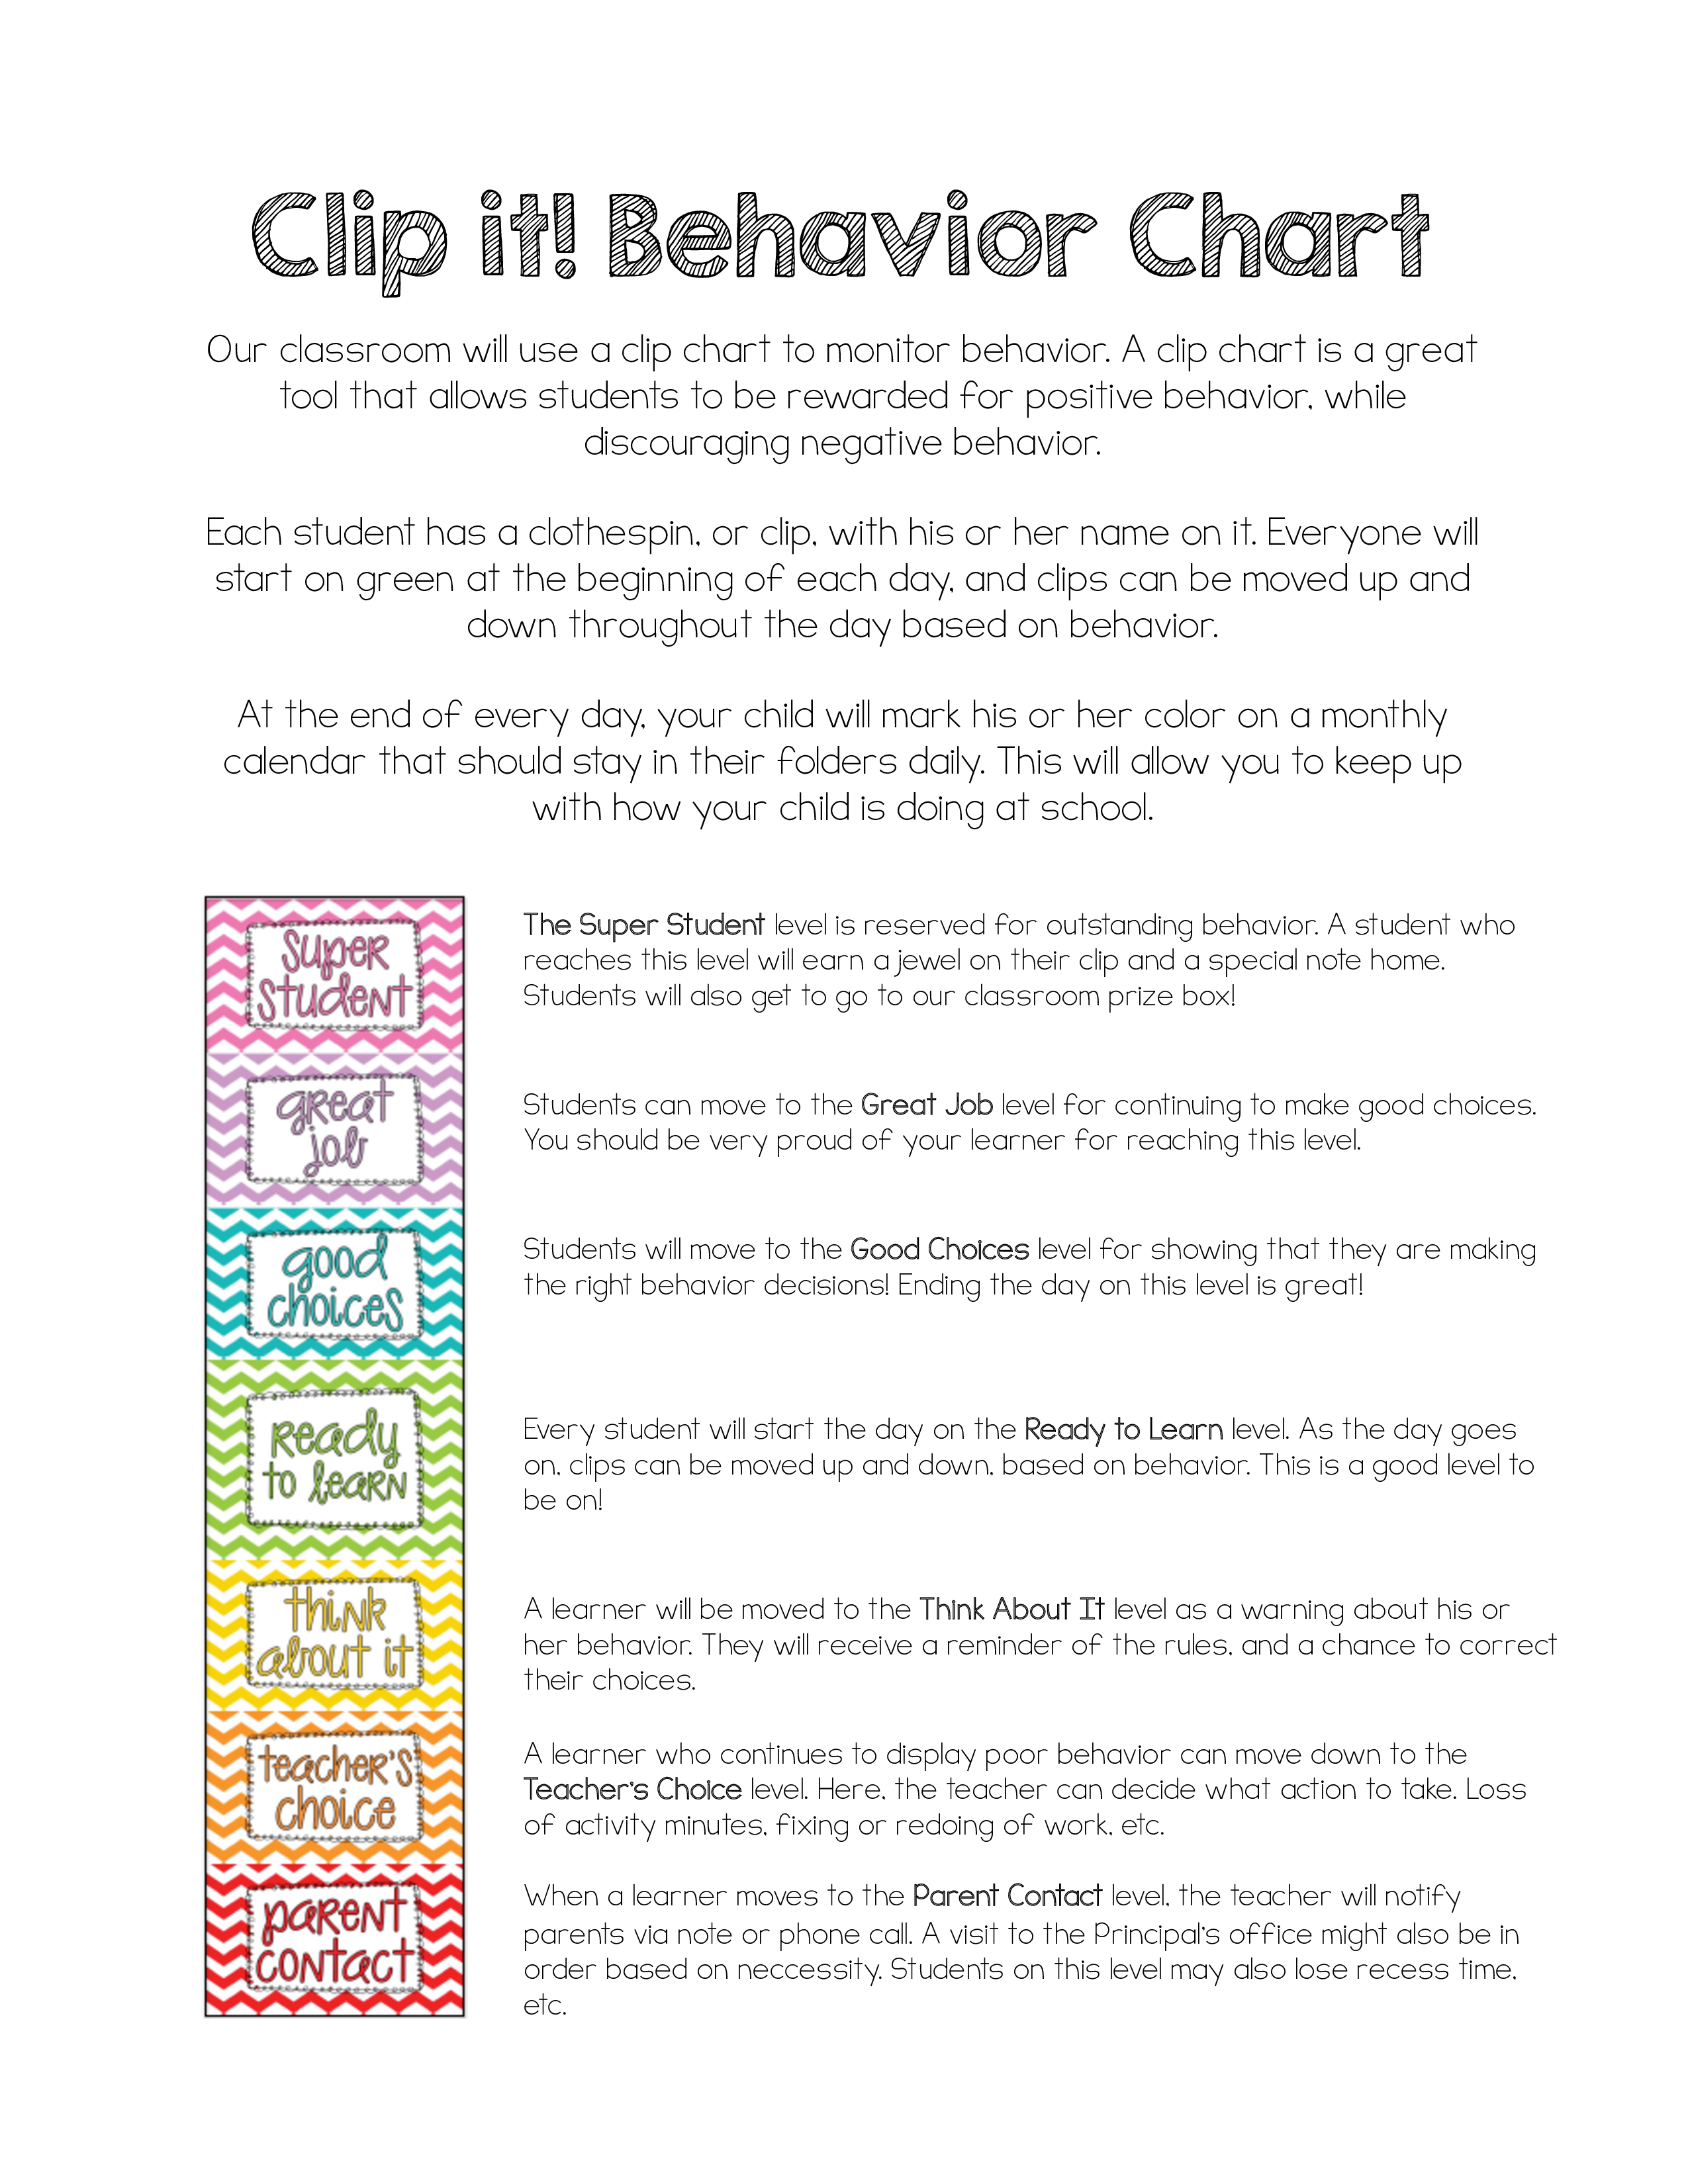 Daily Behavior Chart main image